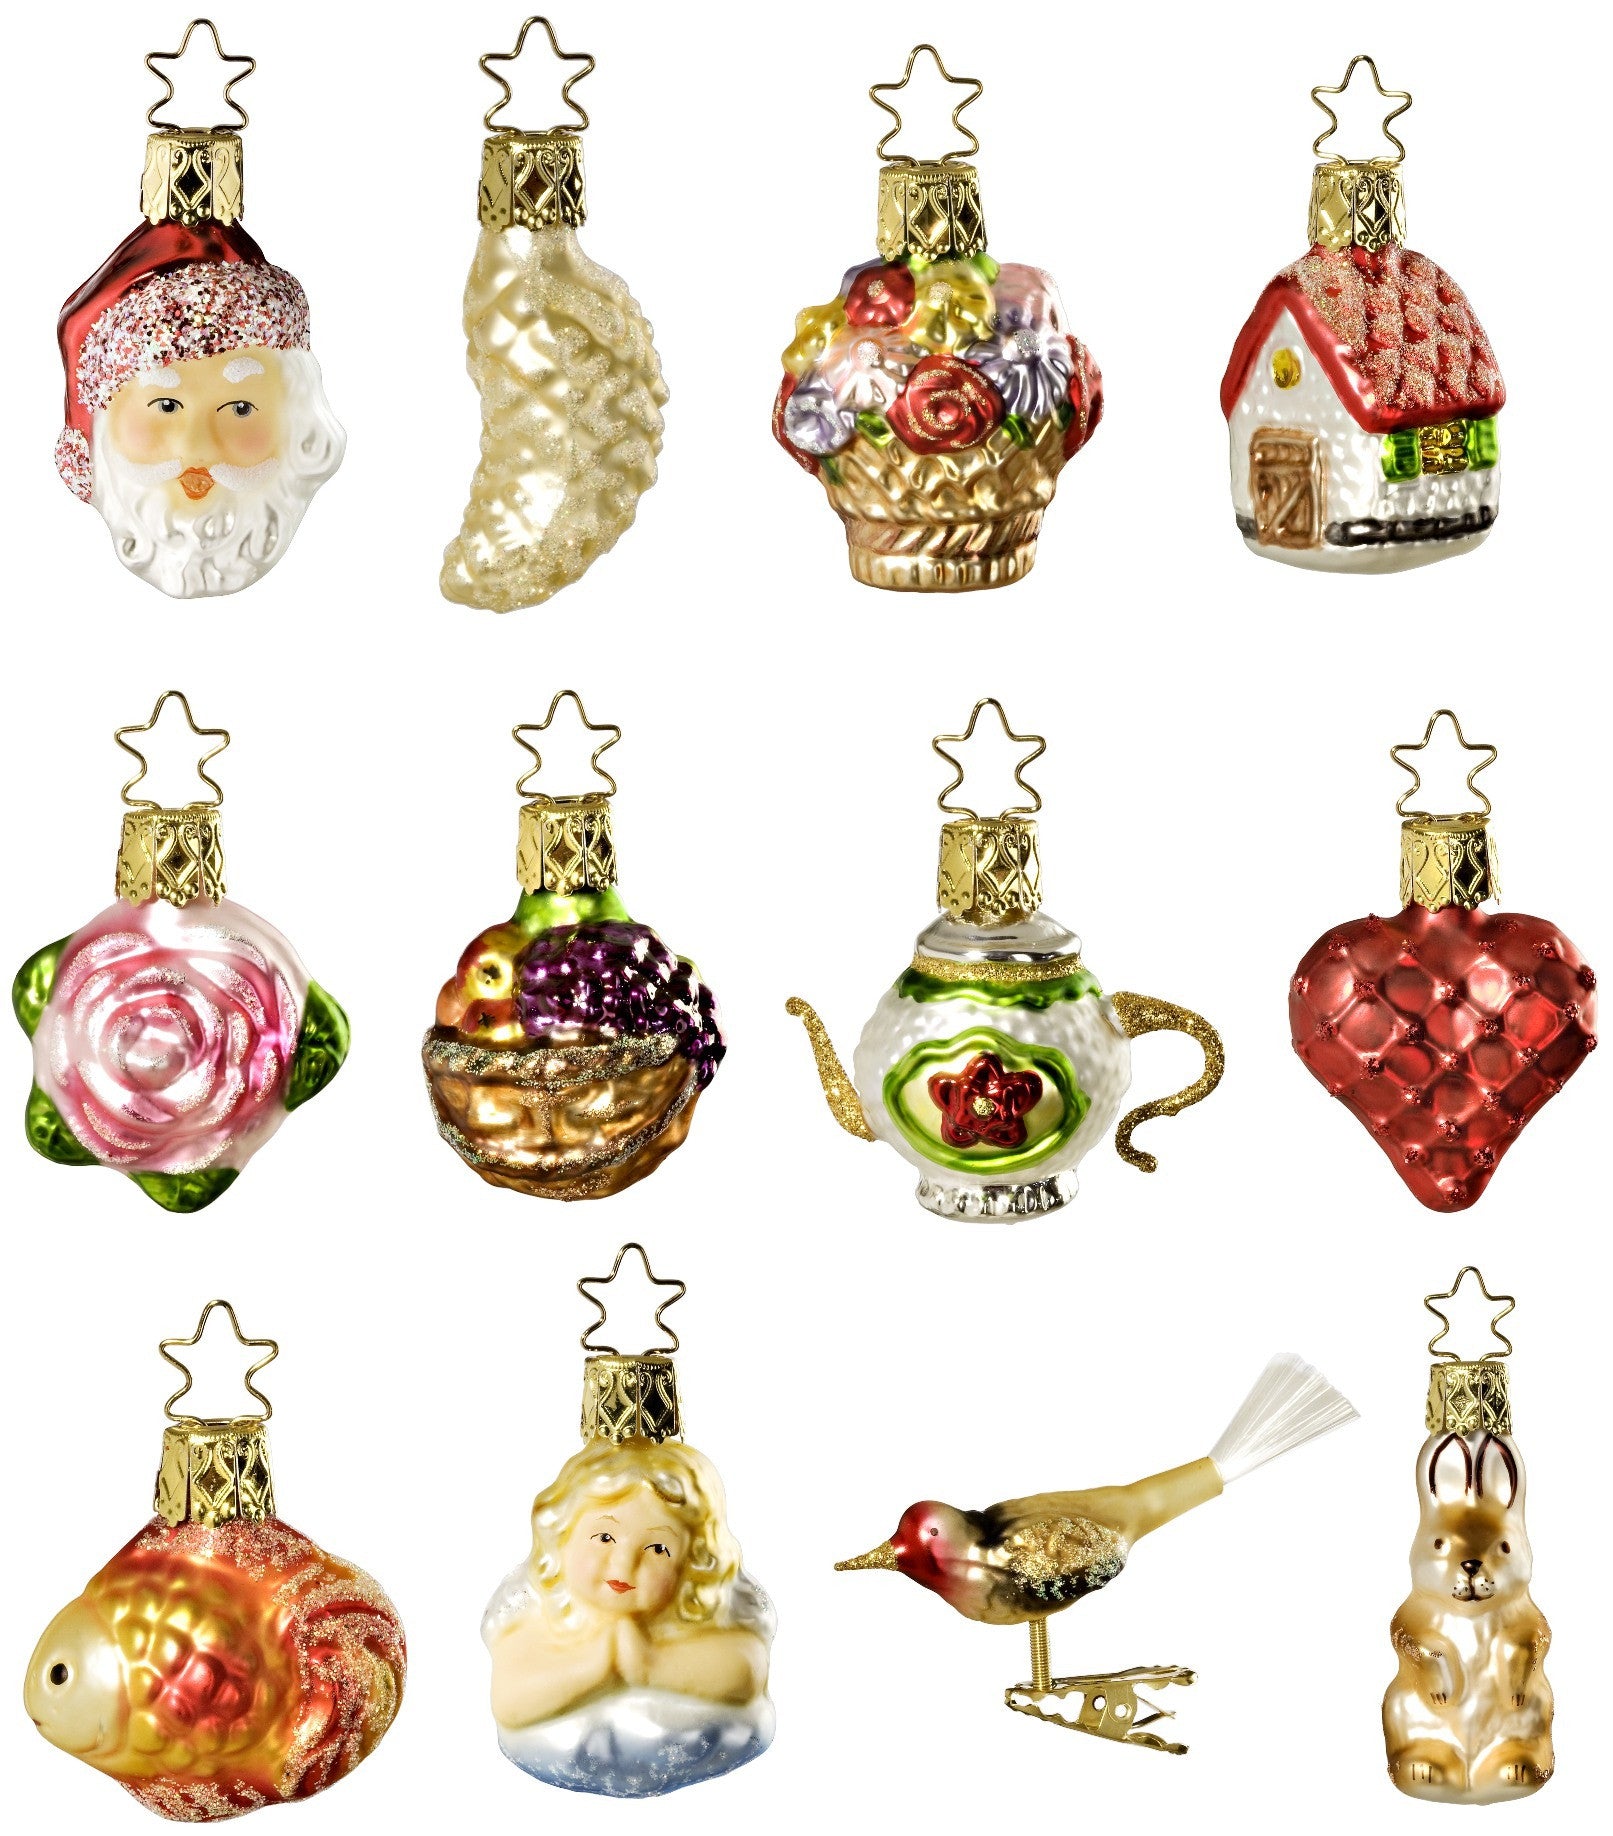 Bridal Collection - Miniature Size - 12 Ornaments - Presentation Box